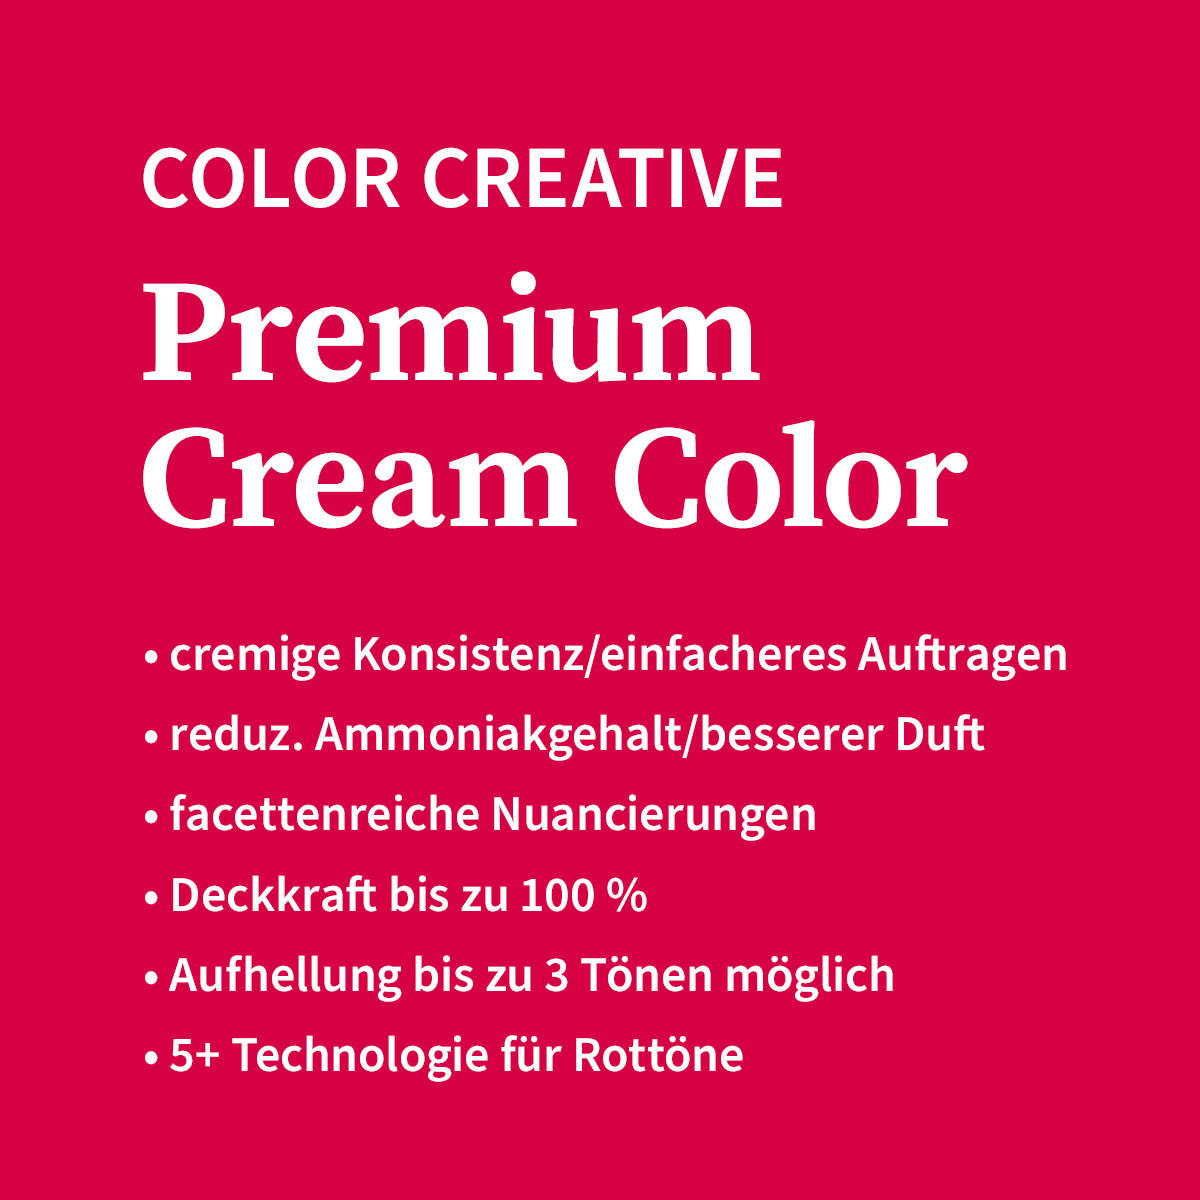 Basler Color Creative Premium Cream Color 10/6 violeta rubio claro, tubo 60 ml - 4